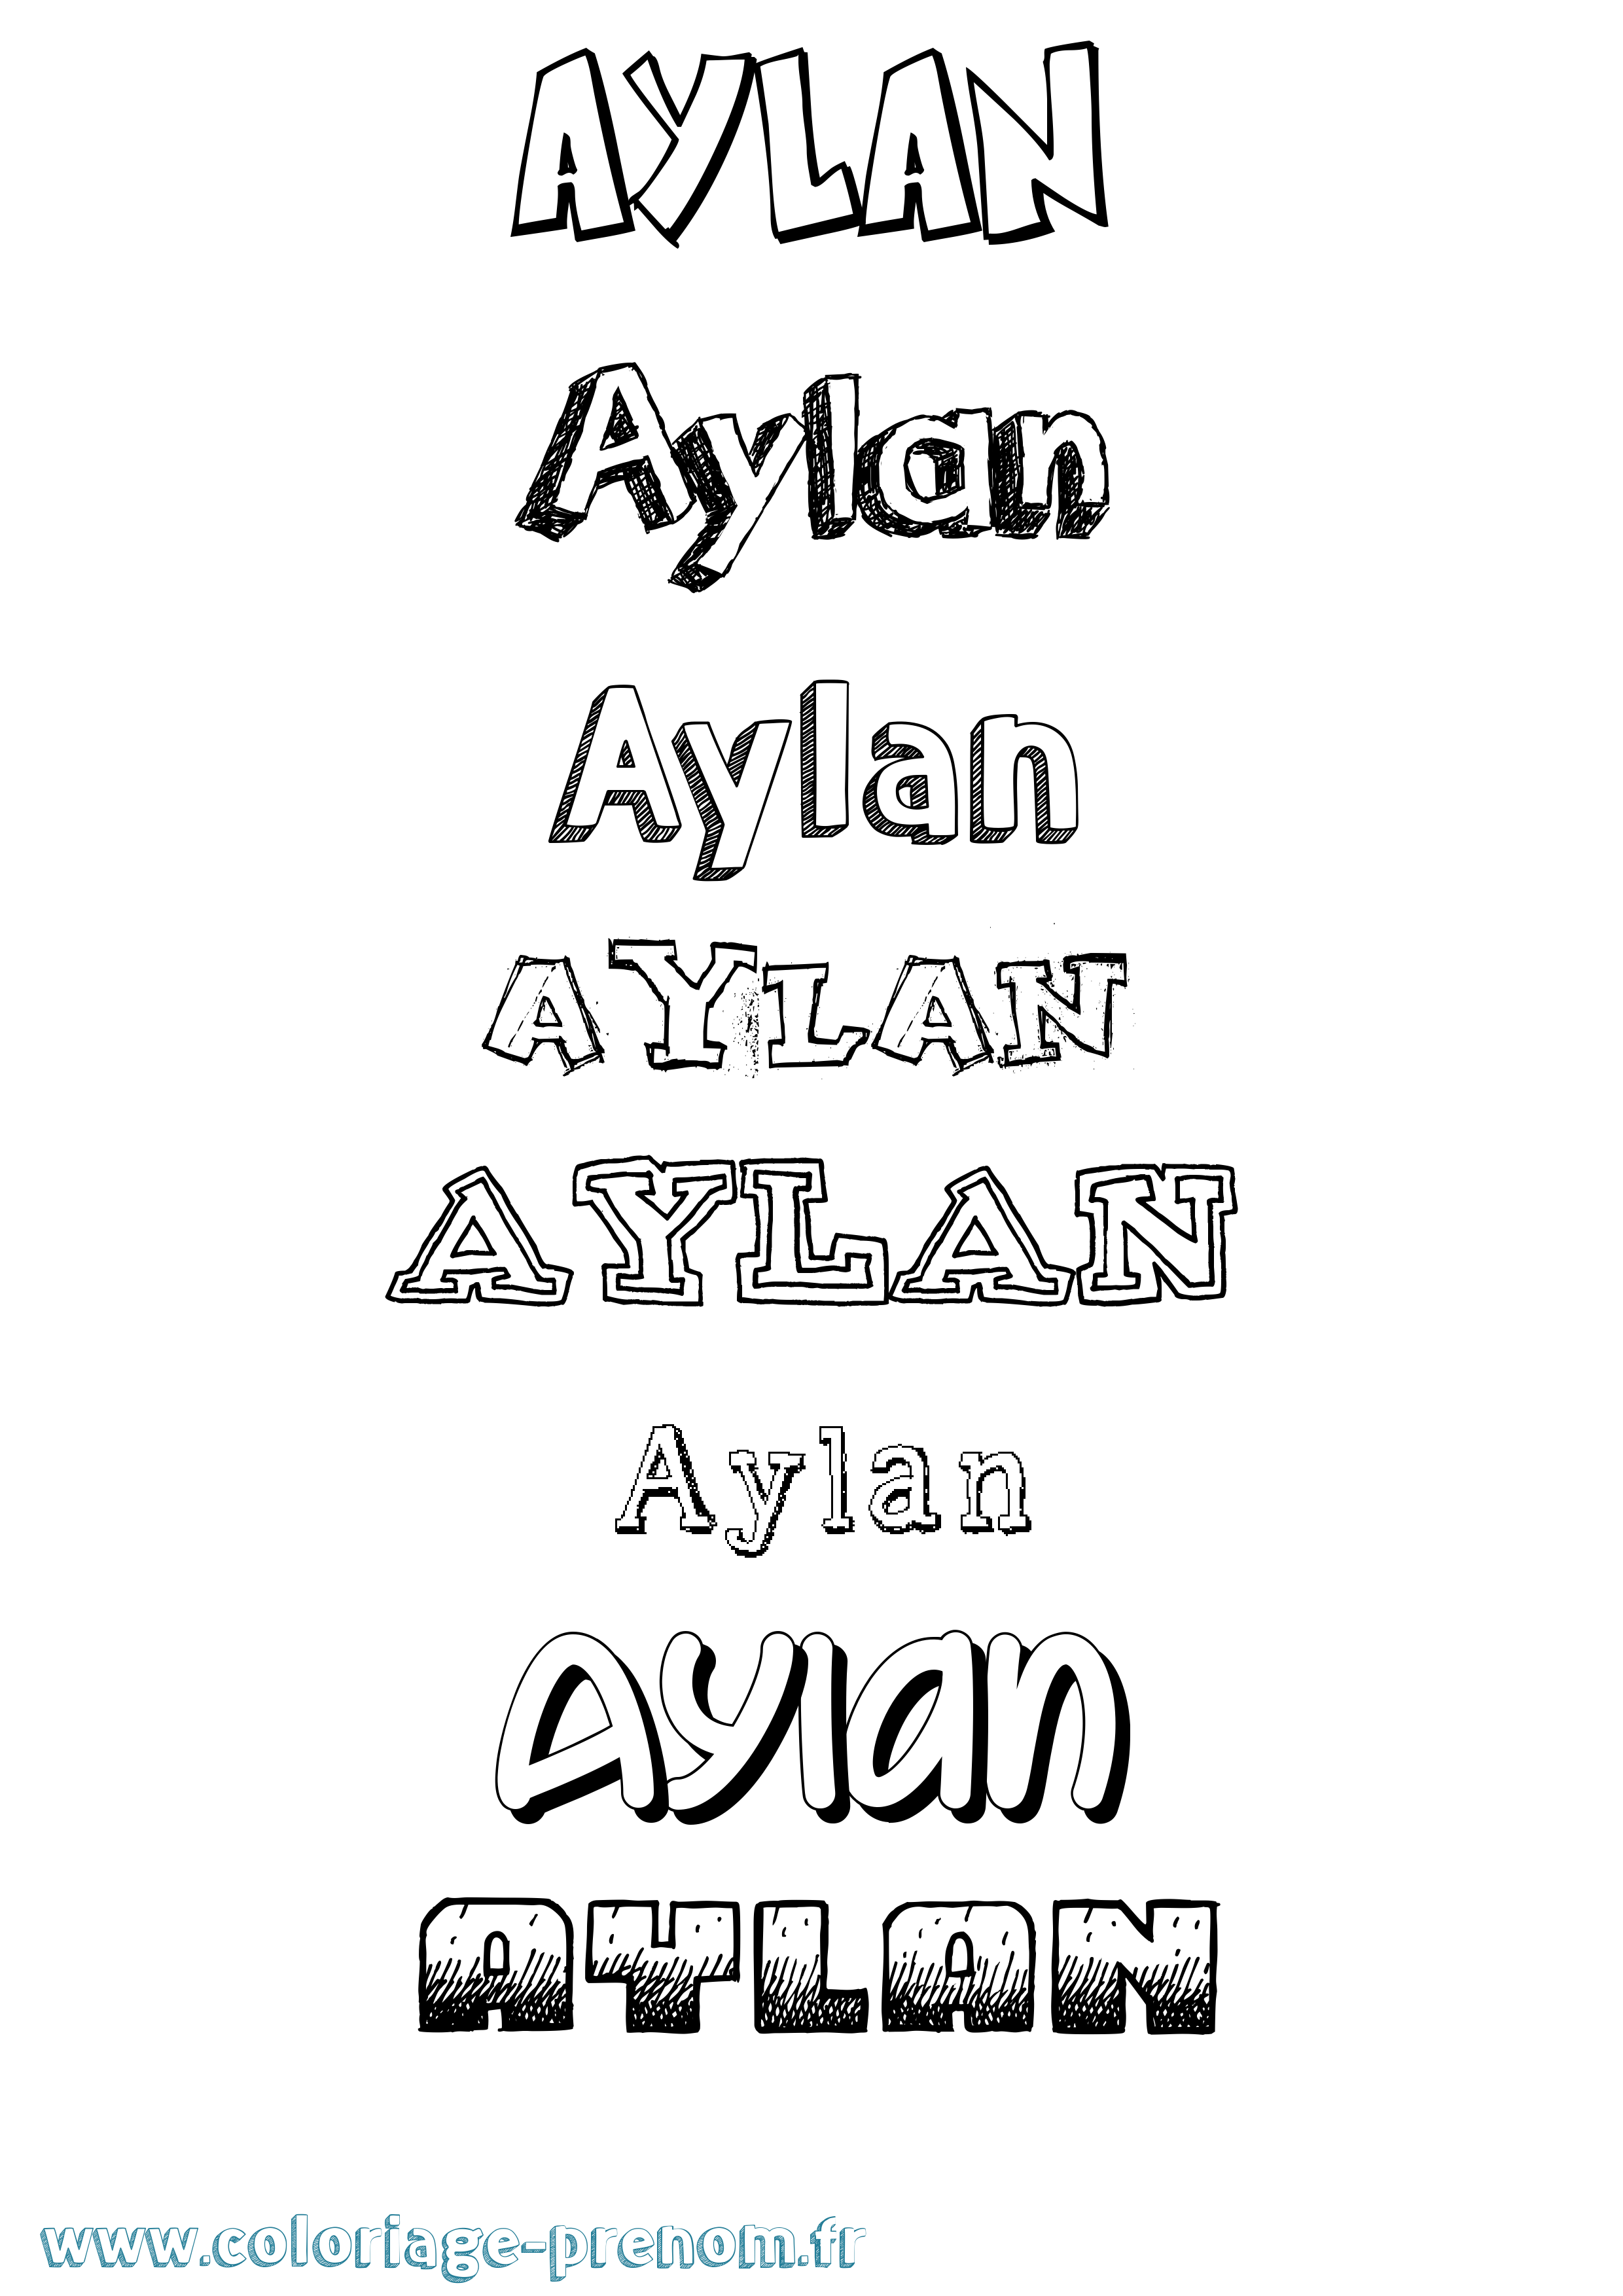 Coloriage prénom Aylan